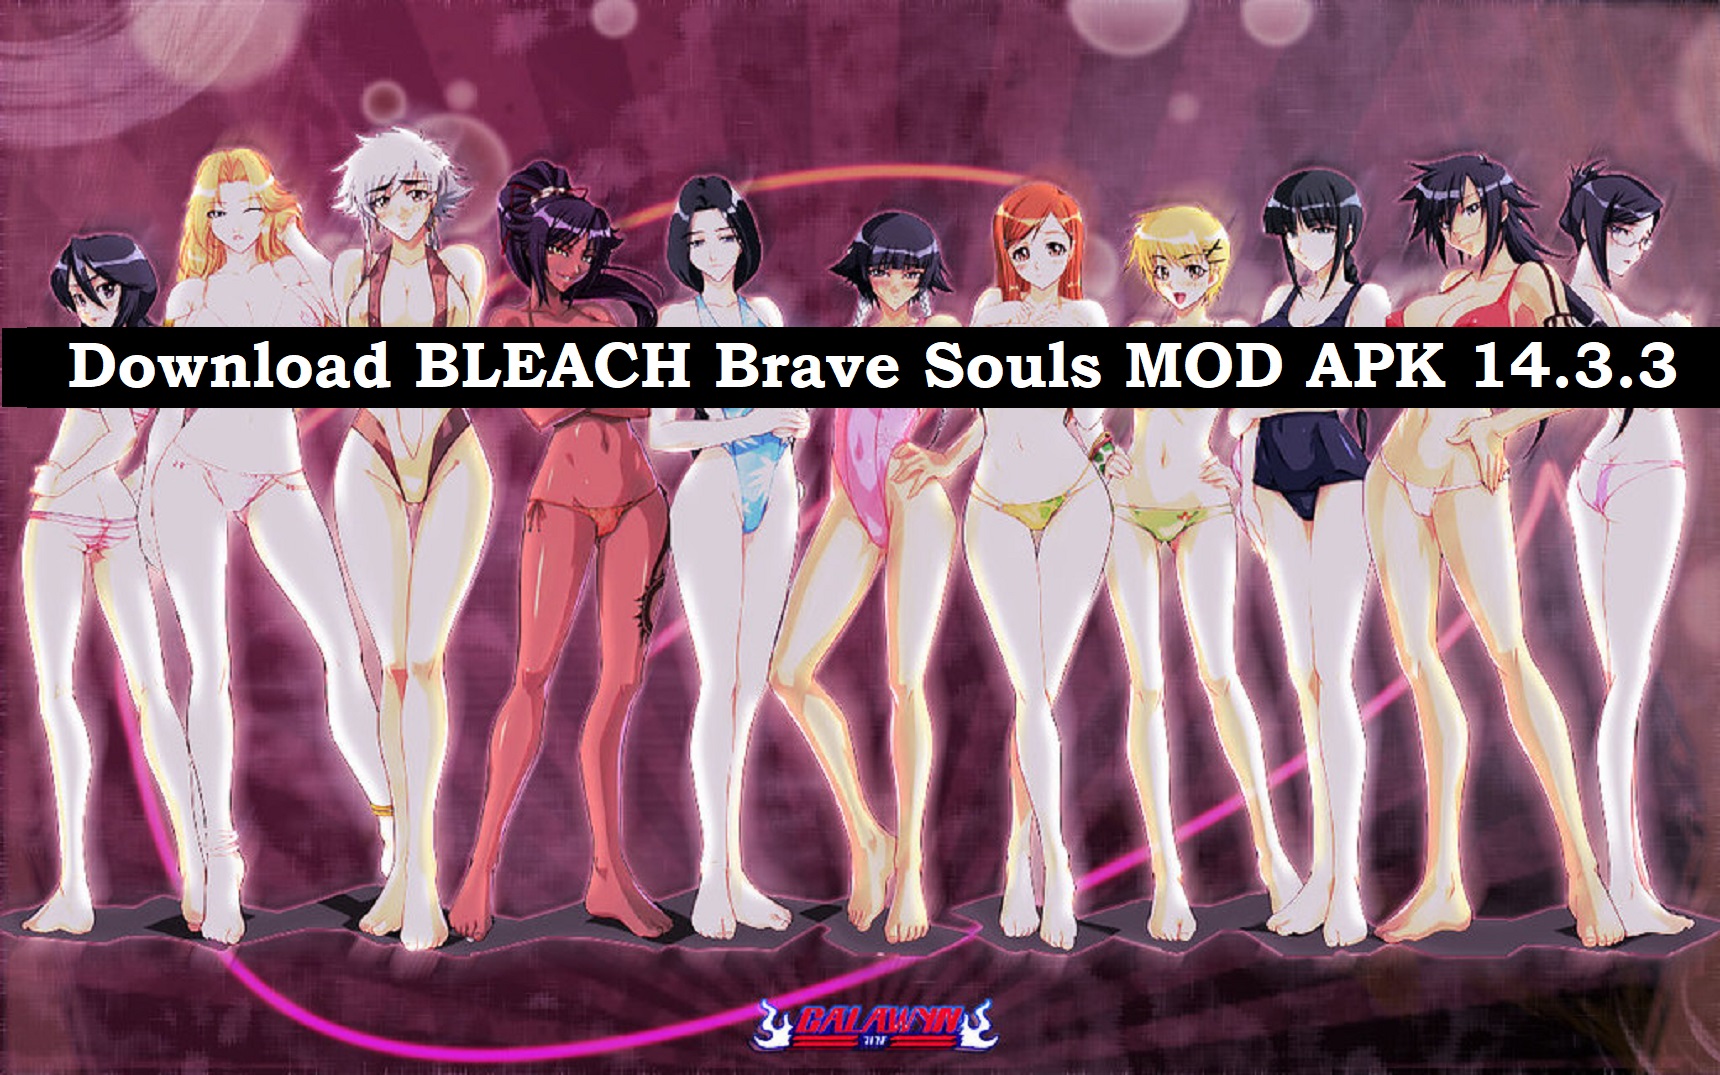 Download BLEACH Brave Souls MOD APK 14.3.3